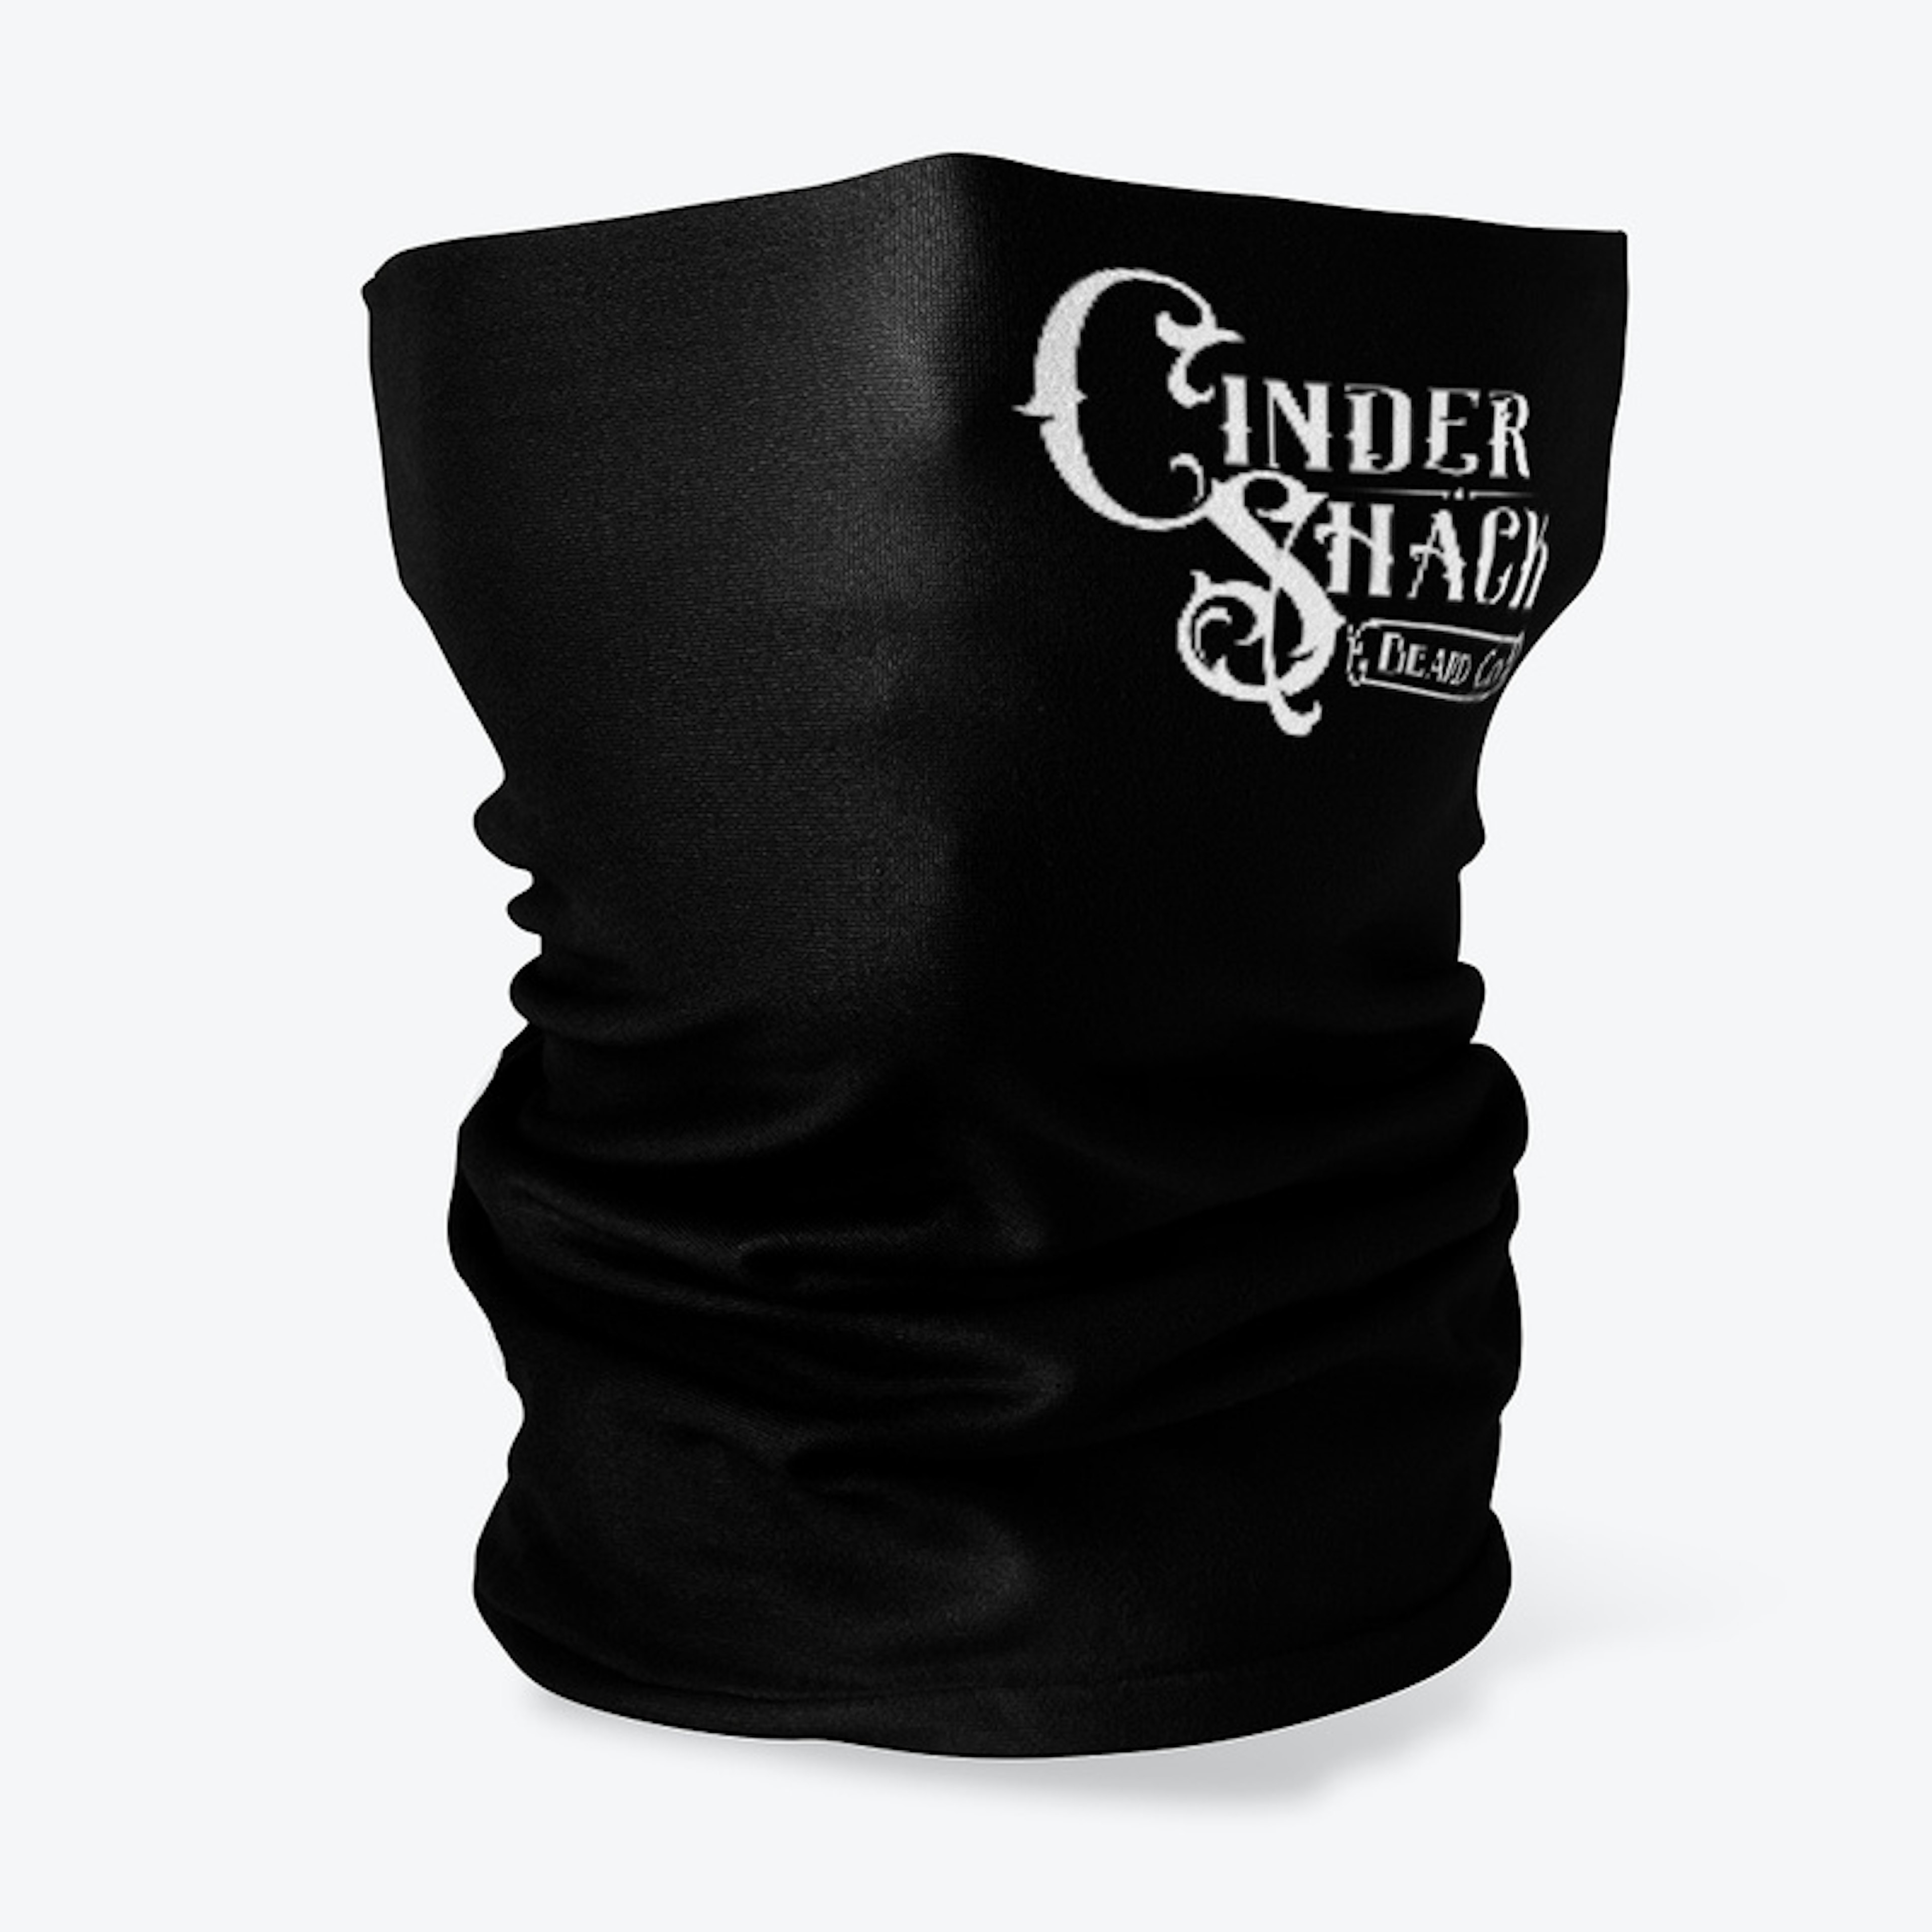 Cinder Shack (Dark)